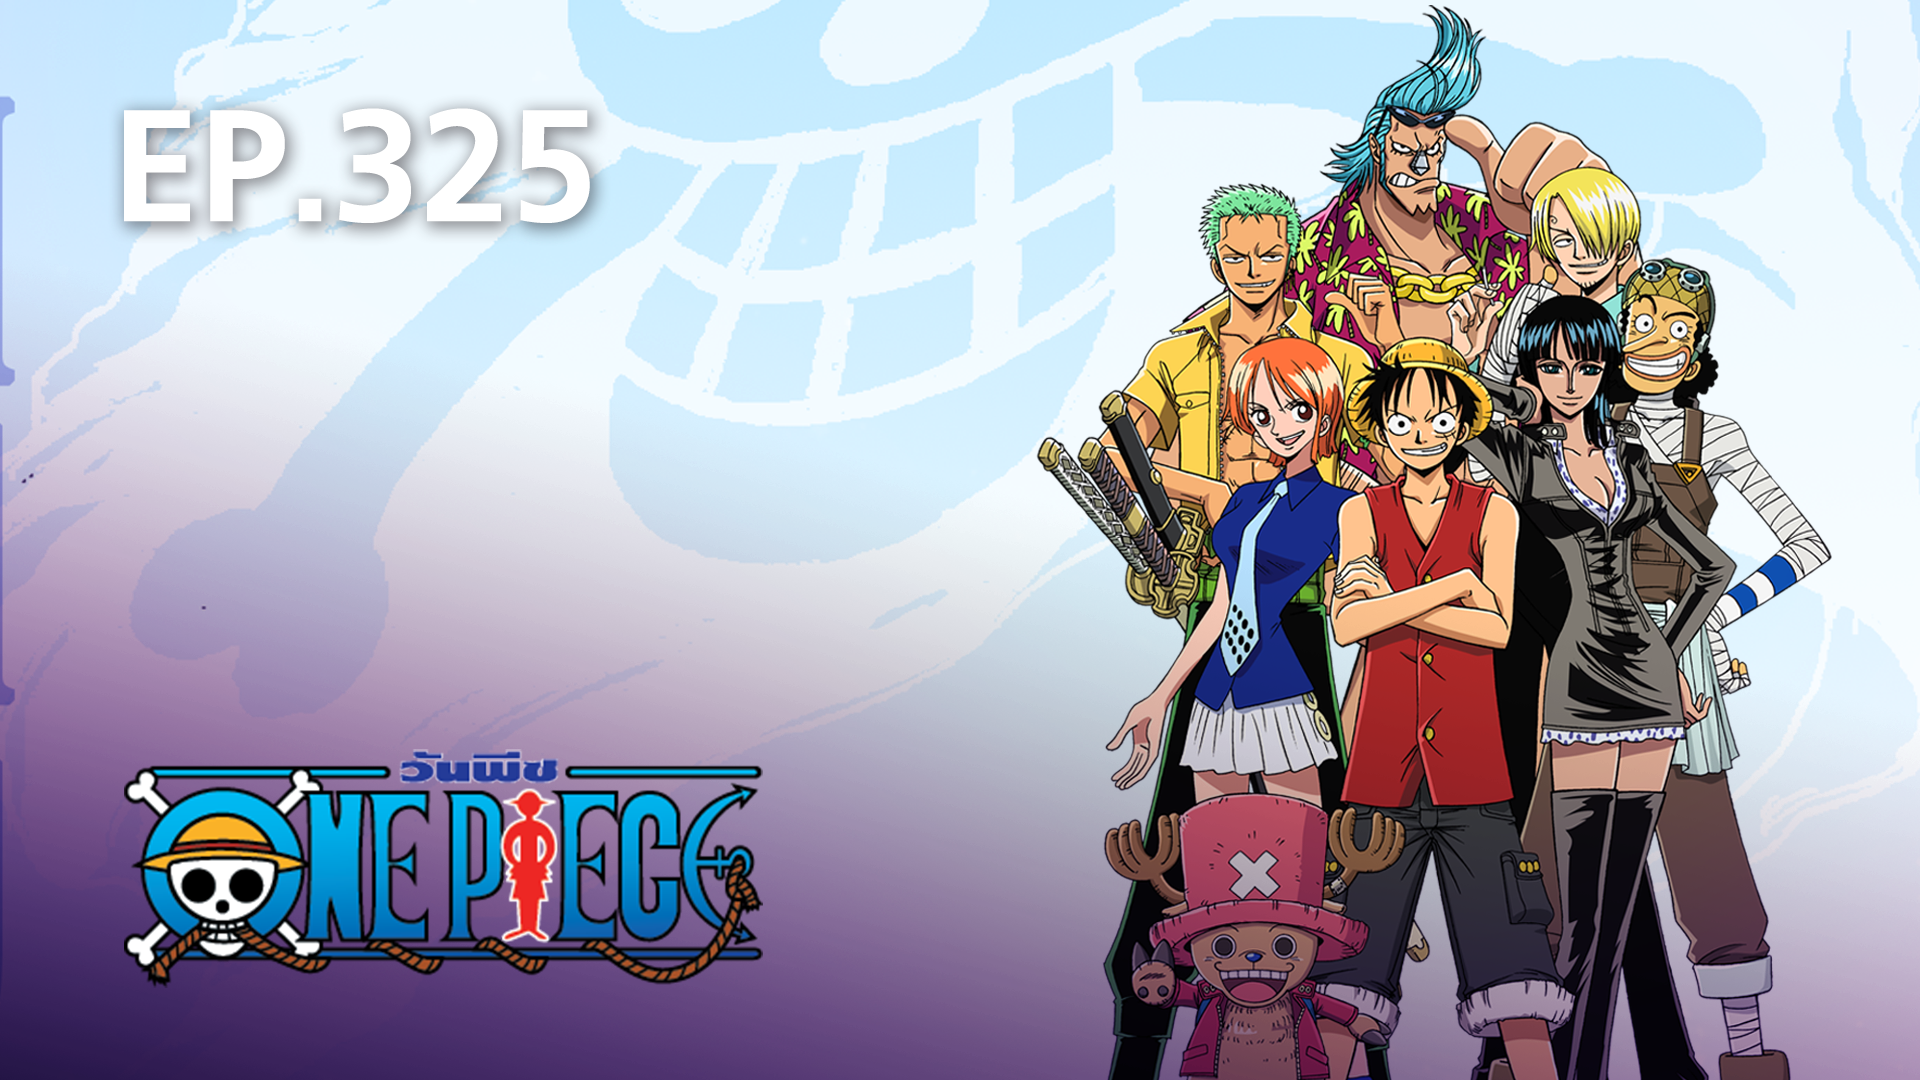 Ep 325 One Piece Watch Series Online